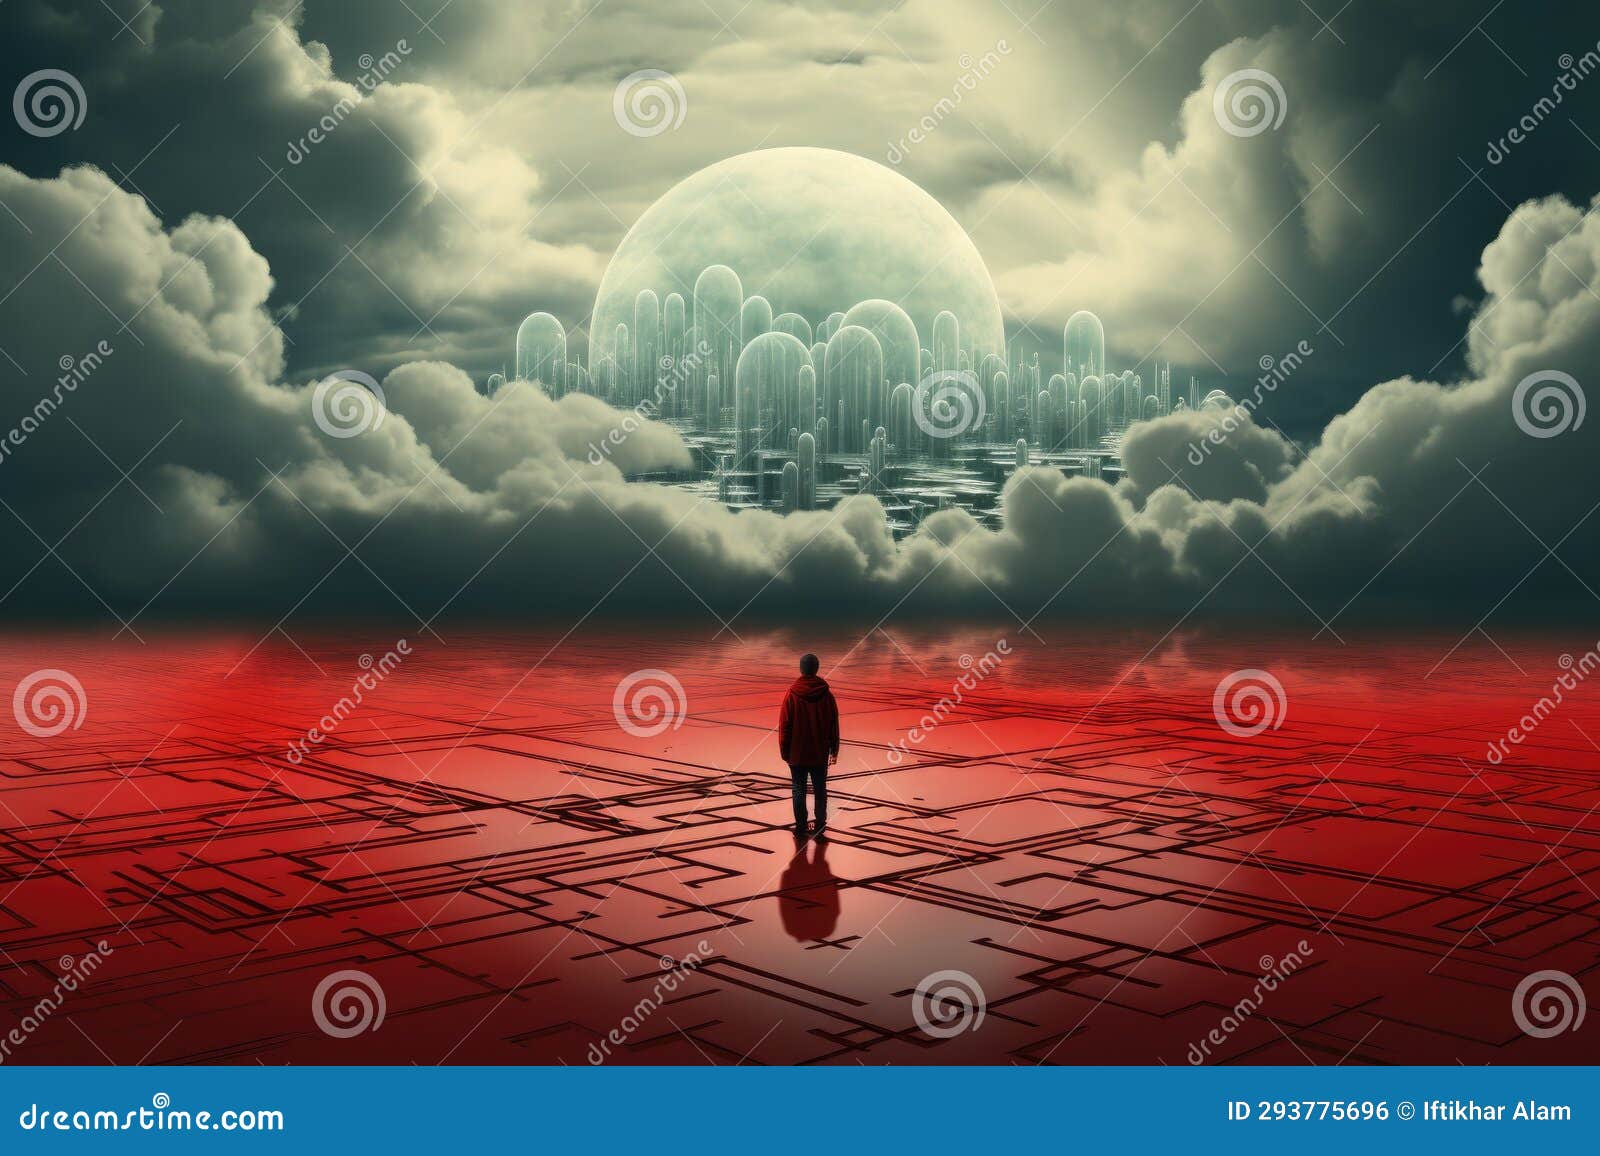 silhouette of a man standing in front of a futuristic city, datos en la nube y red.concepto de ciencia, ai generated